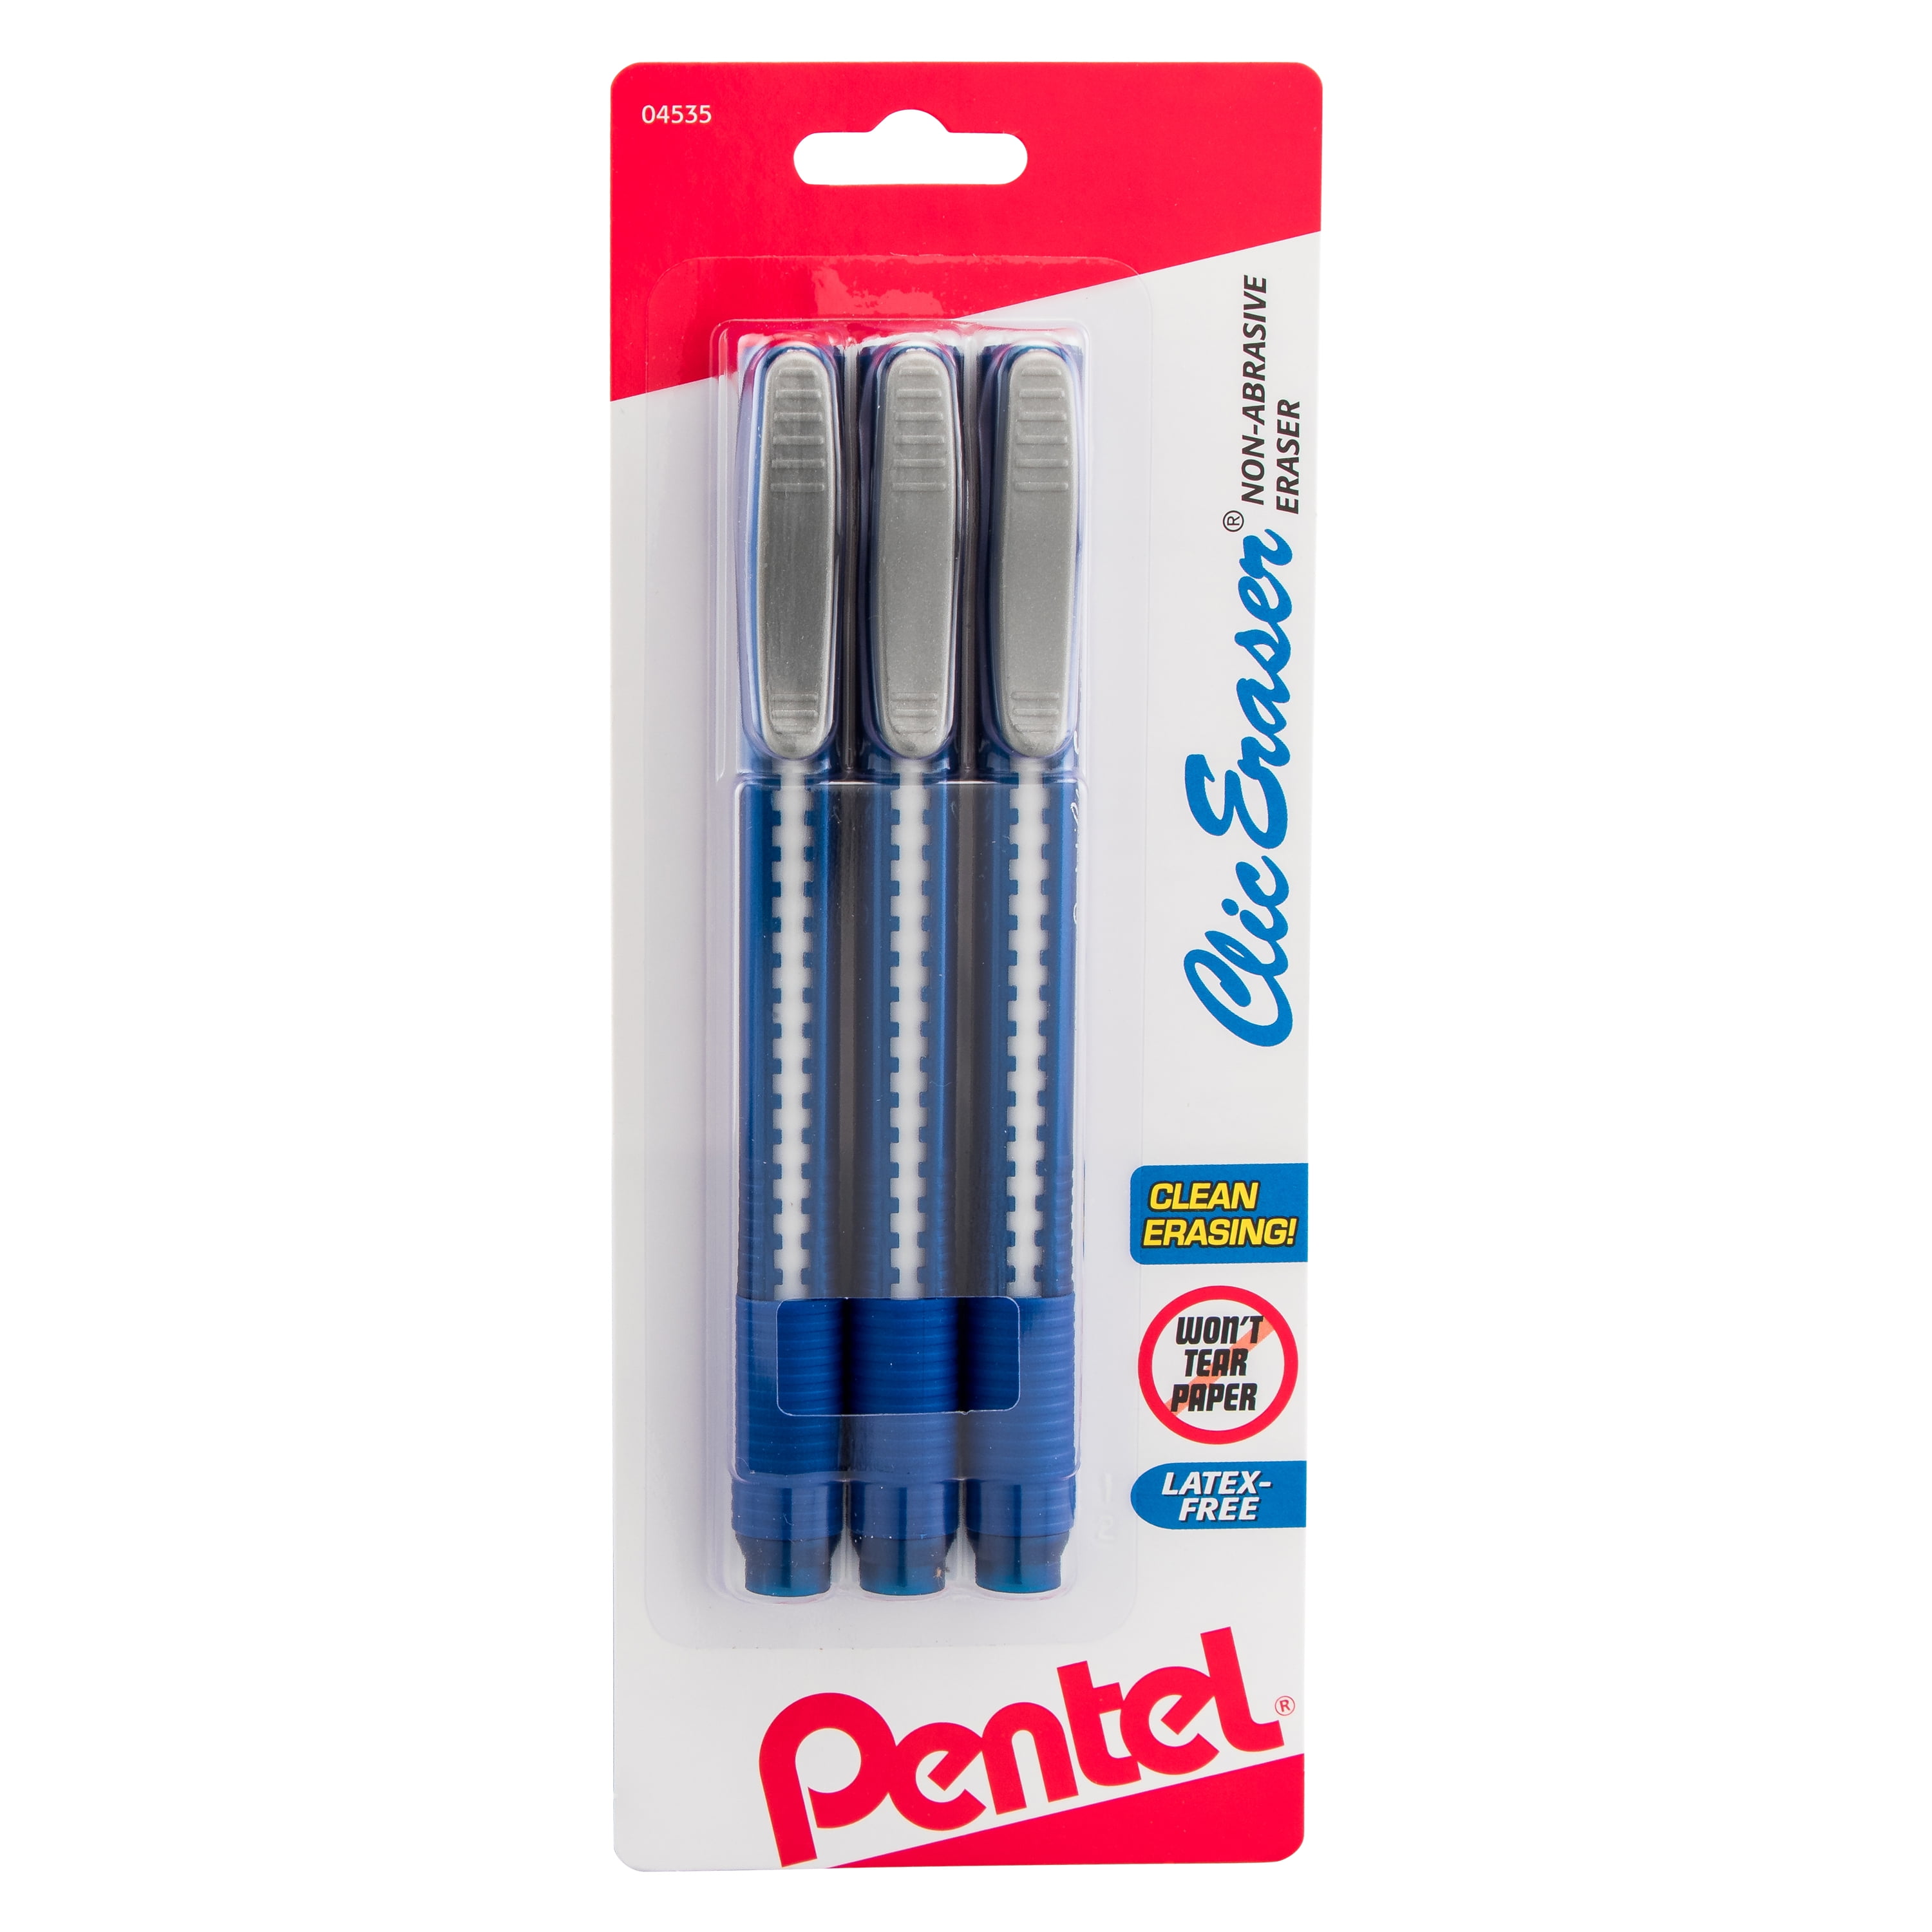 7 Colors m118 Pentel Clic Eraser Grip Retractable Eraser ZE80 